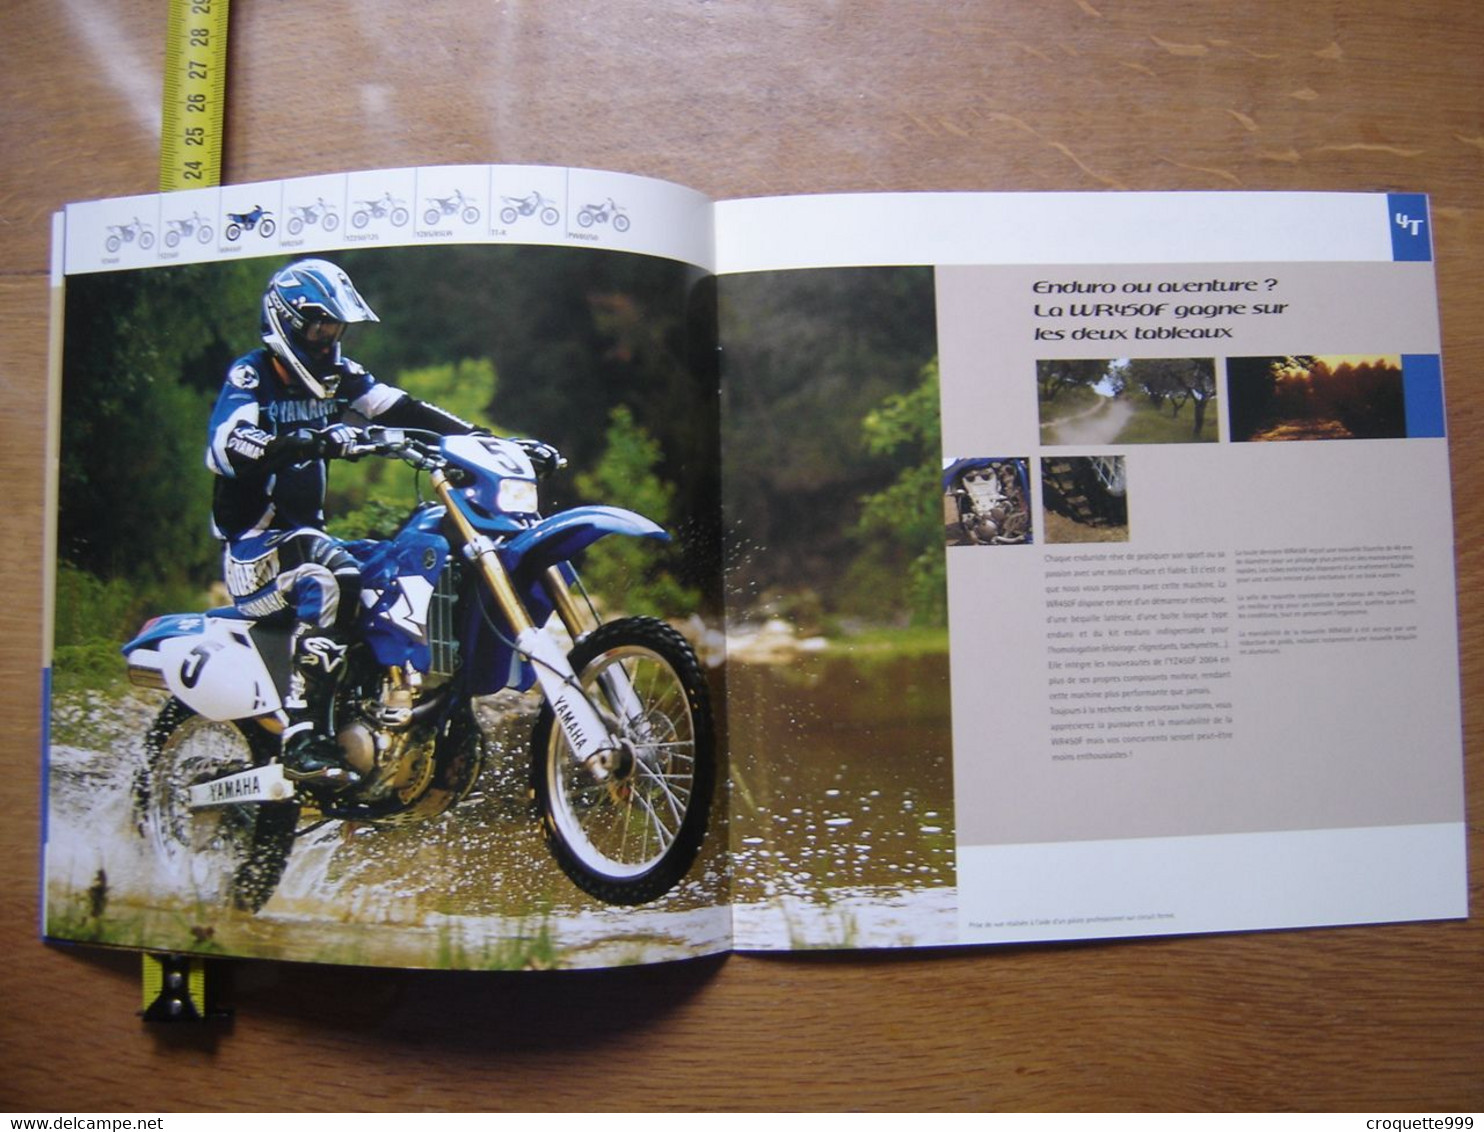 Brochure Catalogue Publicite Prospekt MOTO YAMAHA 2004 Gamme Tout Terrain - Motos